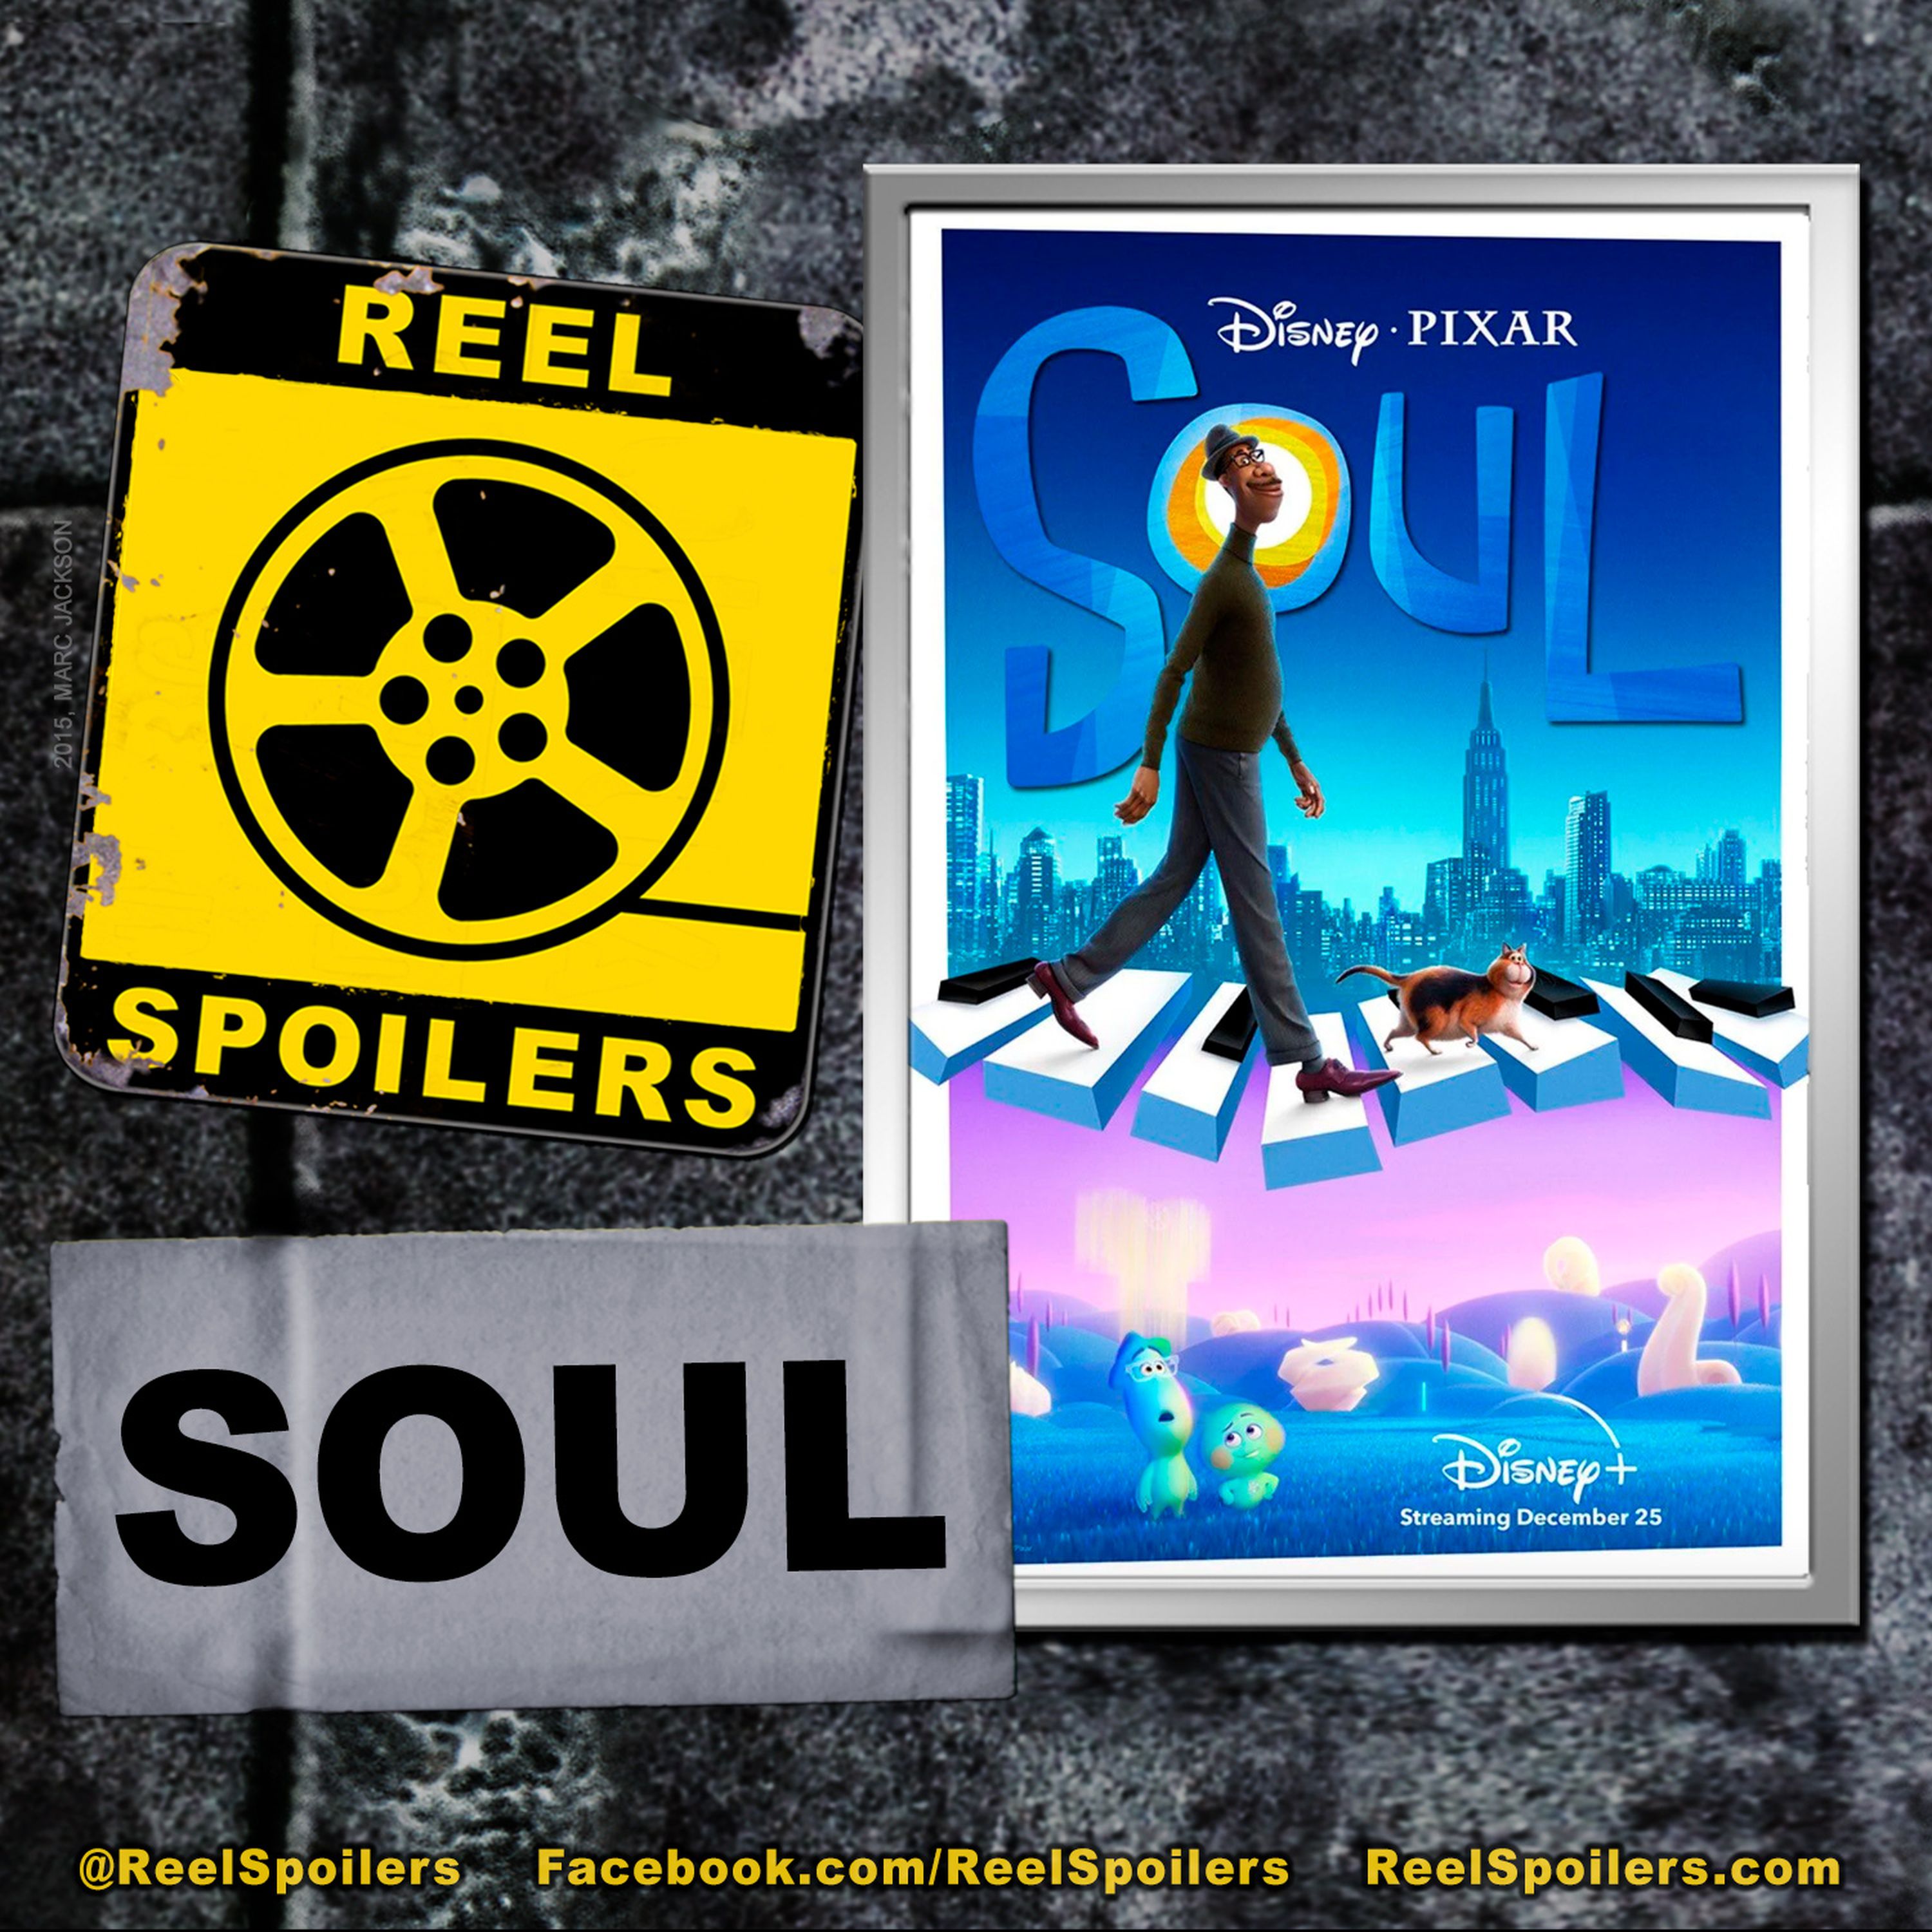 Disney-Pixar's SOUL Starring Jamie Foxx, Tina Fey, Angela Bassett Image